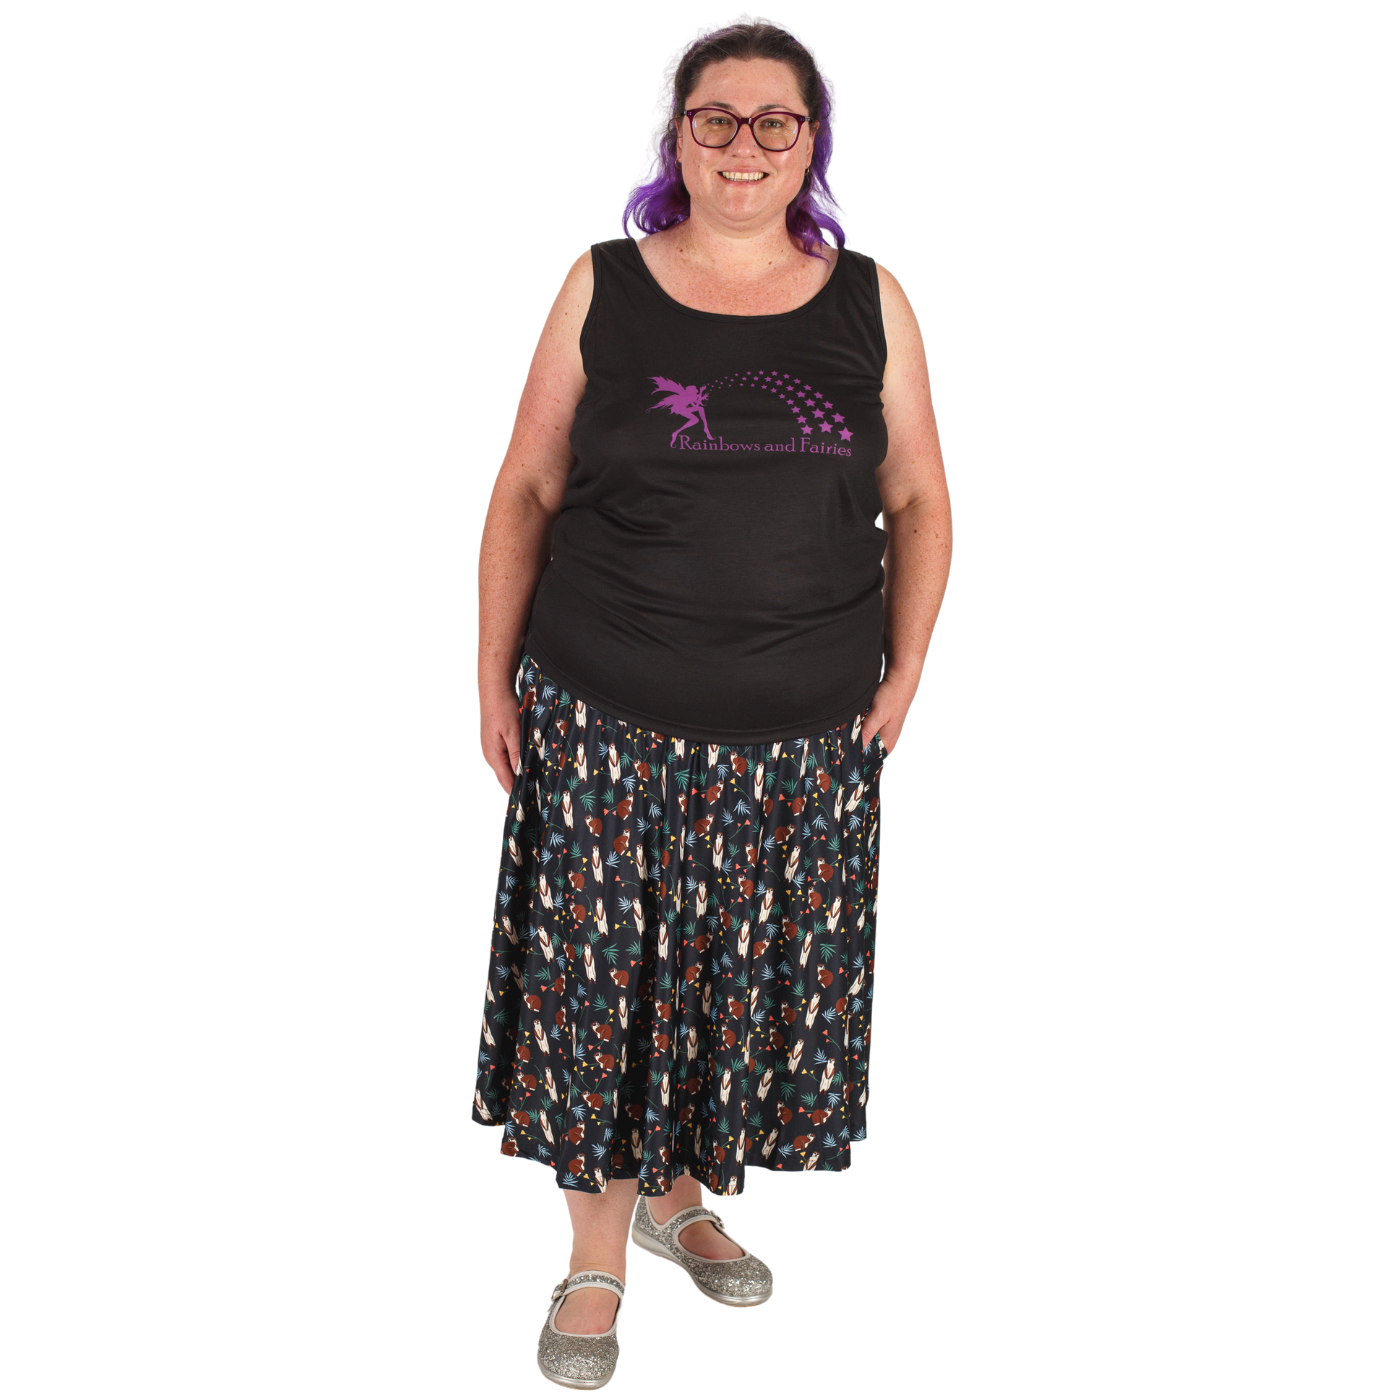 Burrow Swishy Skirt by RainbowsAndFairies.com (Meerkat - Animal Print - Skirt With Pockets - Circle Skirt - Vintage Inspired) - SKU: CL_SWISH_BURRO_ORG - Pic 03